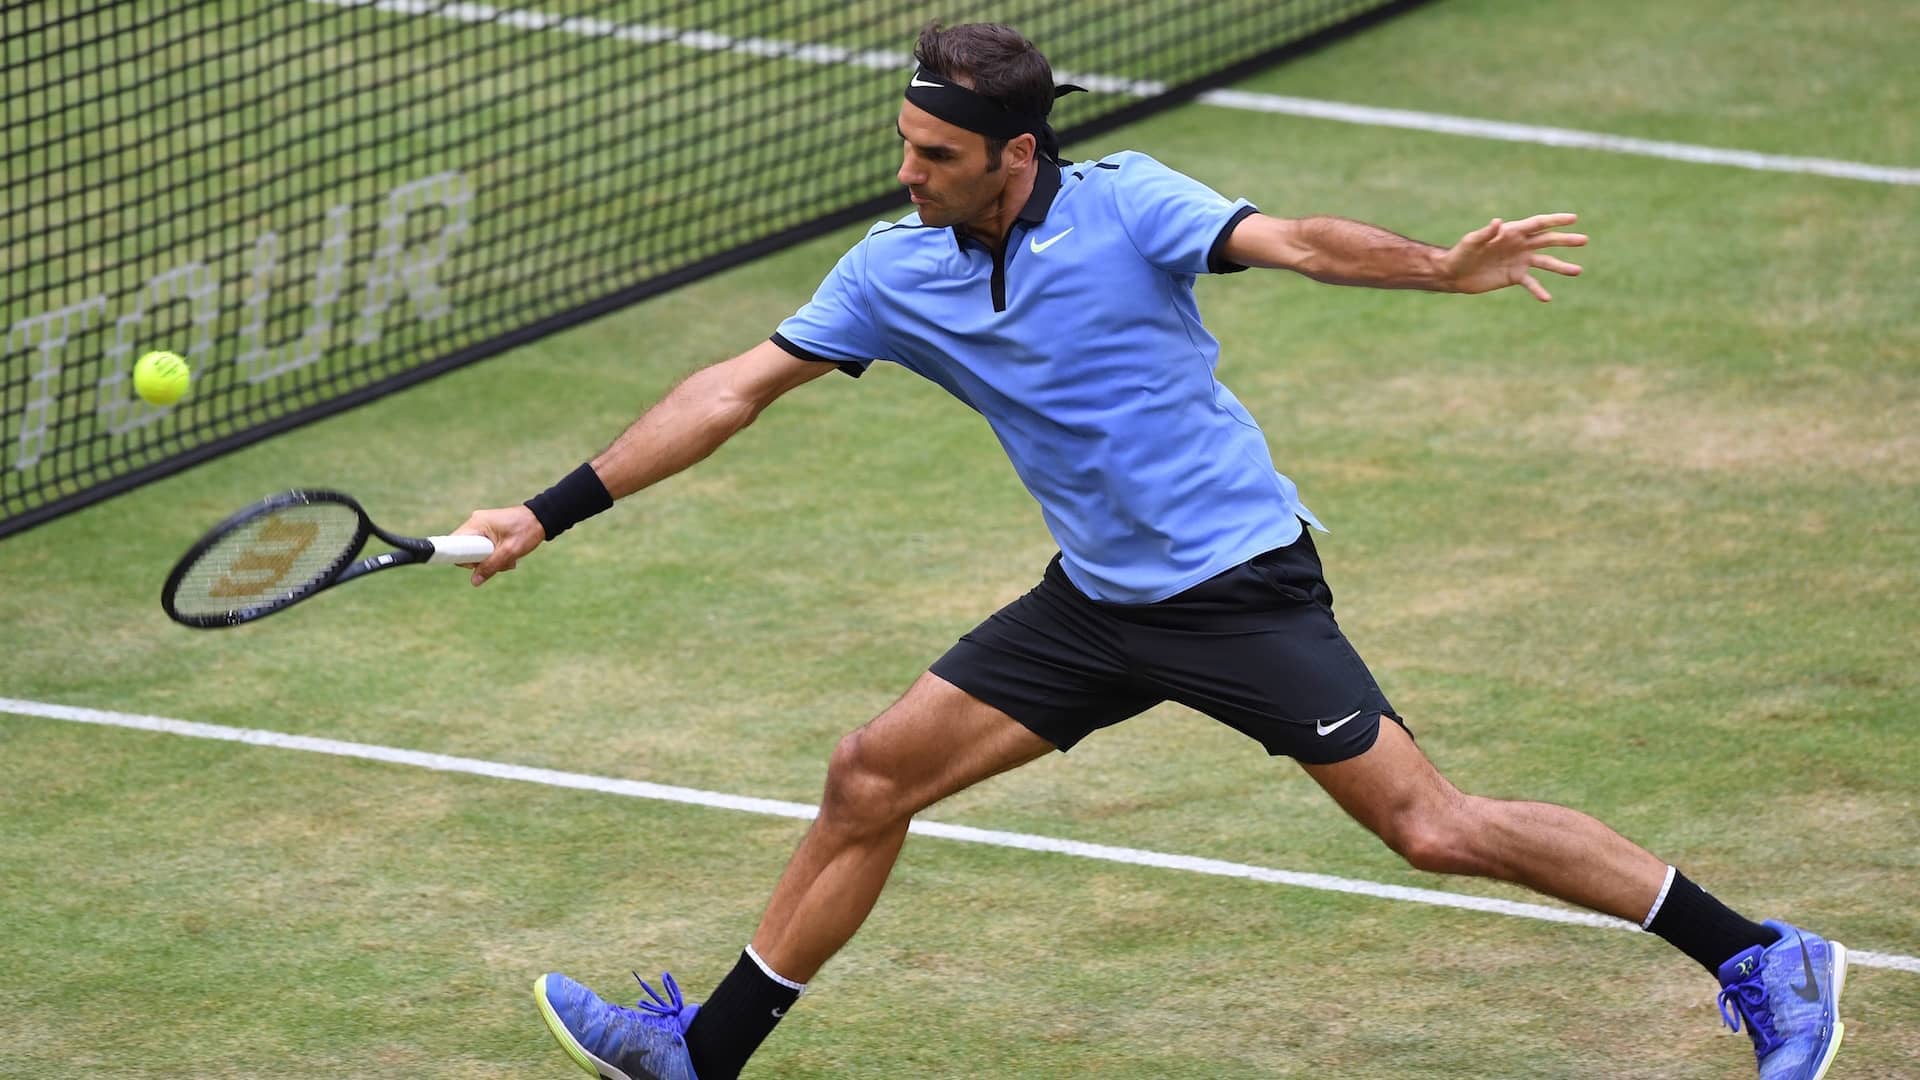 Duque Saco Dependencia Federer destrona al campeón Mayer en Halle | ATP Tour | Tenis